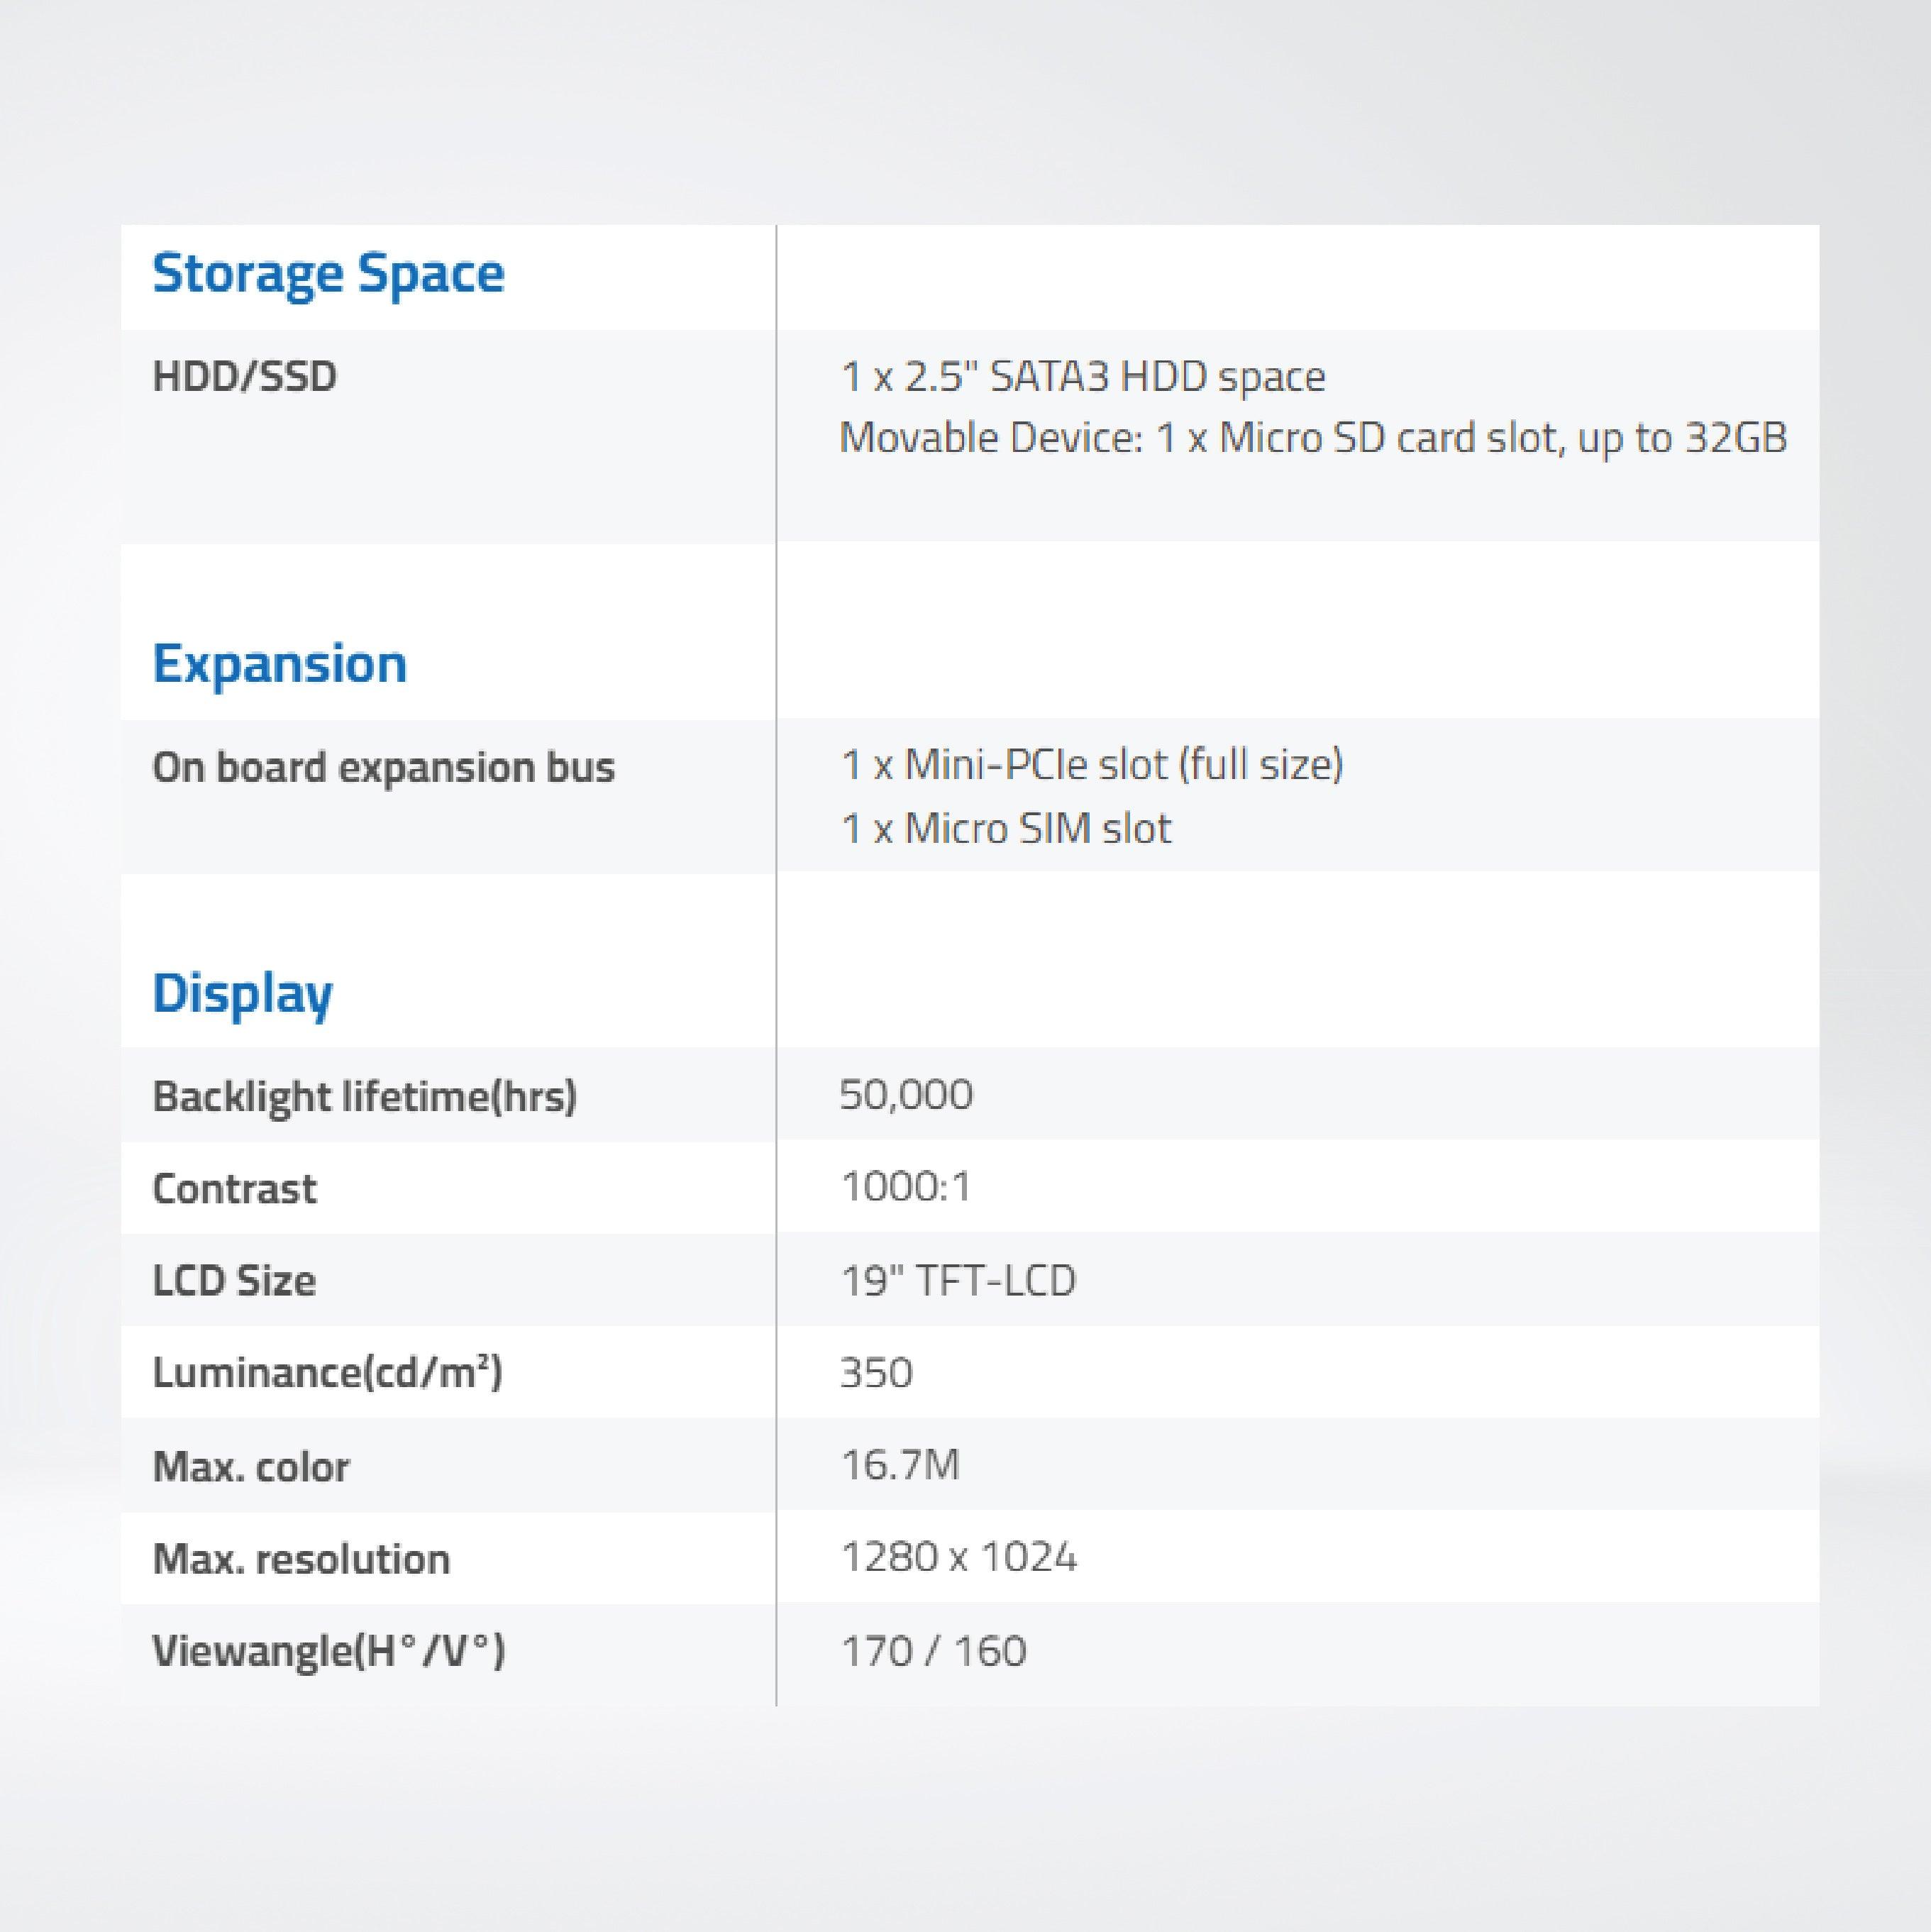 ARCHMI-819P 19" Intel Celeron N2930/ Atom E3845, Fanless Industrial Compact Size Panel PC - Riverplus